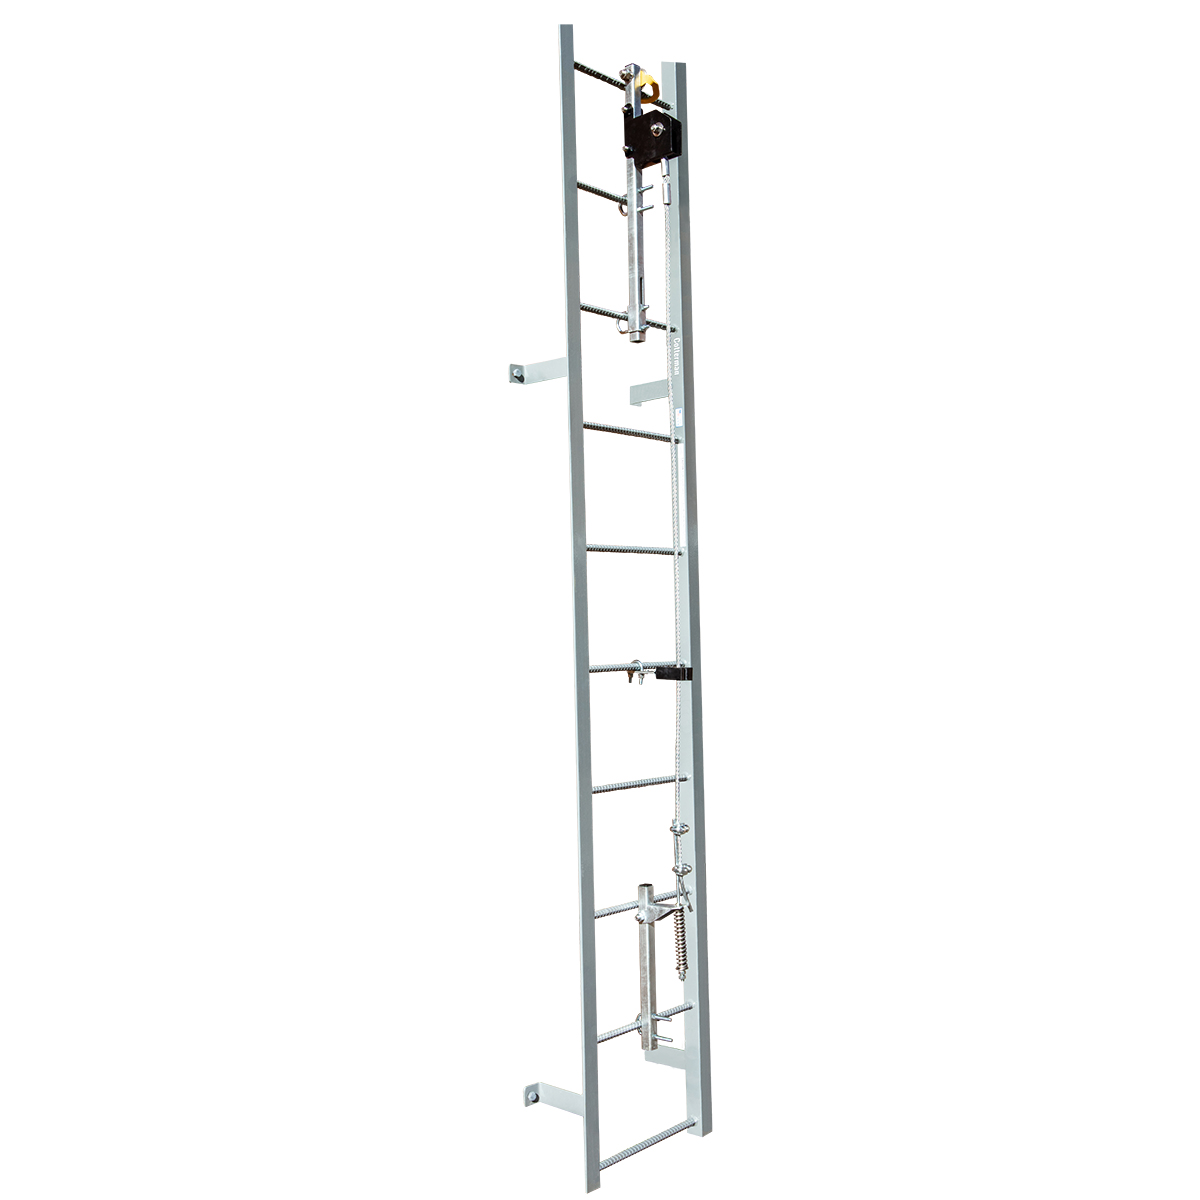 SafeWaze 30' VLL Cable Ladder System, 2-person Complete Kit